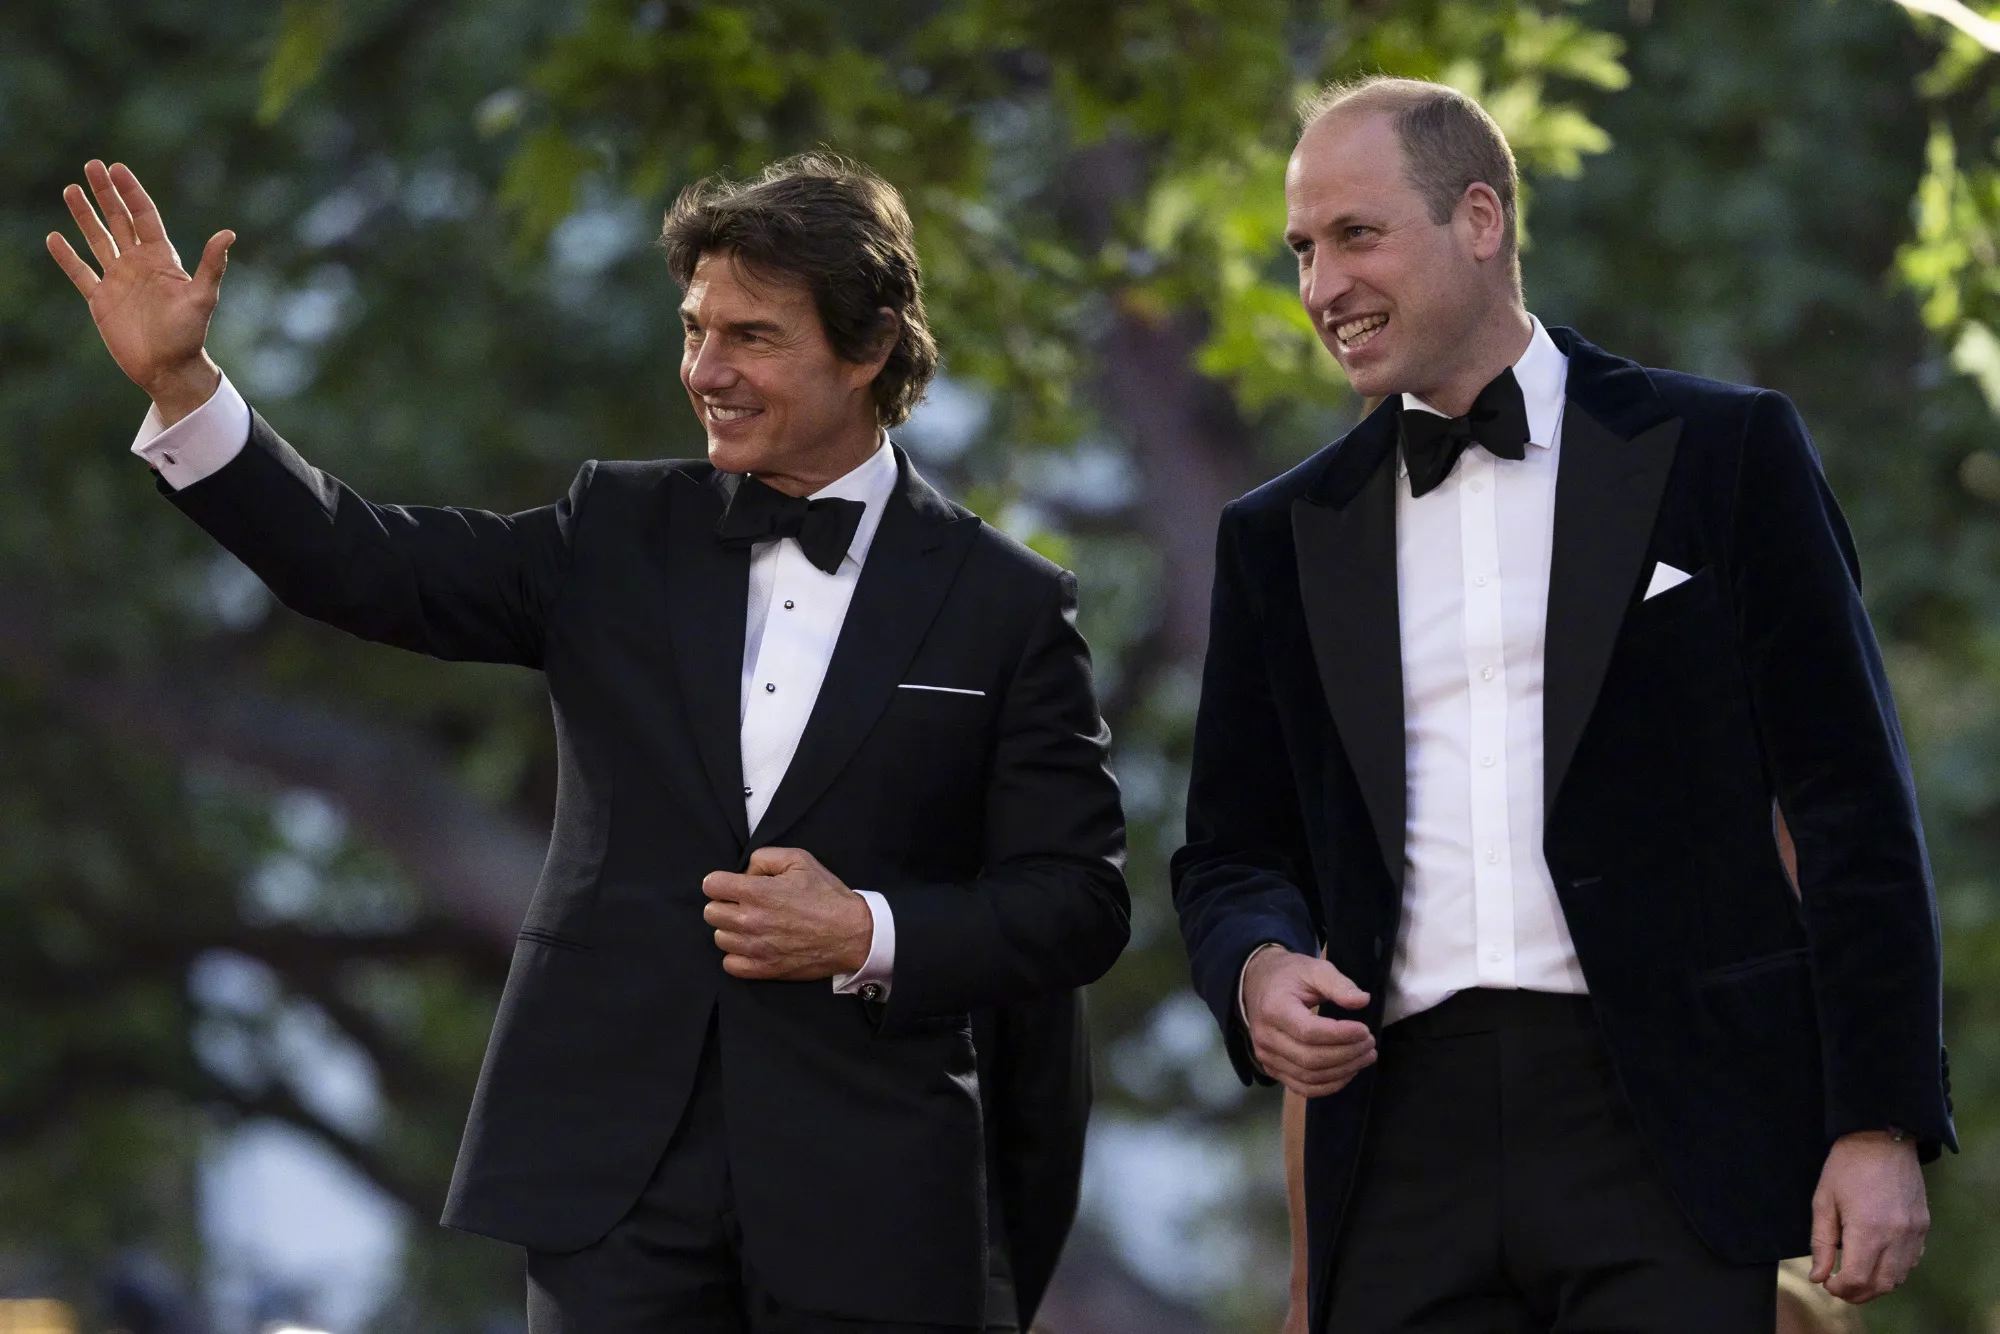 Top Gun: Maverick London premiere, William and Kate meet Tom Cruise and crew